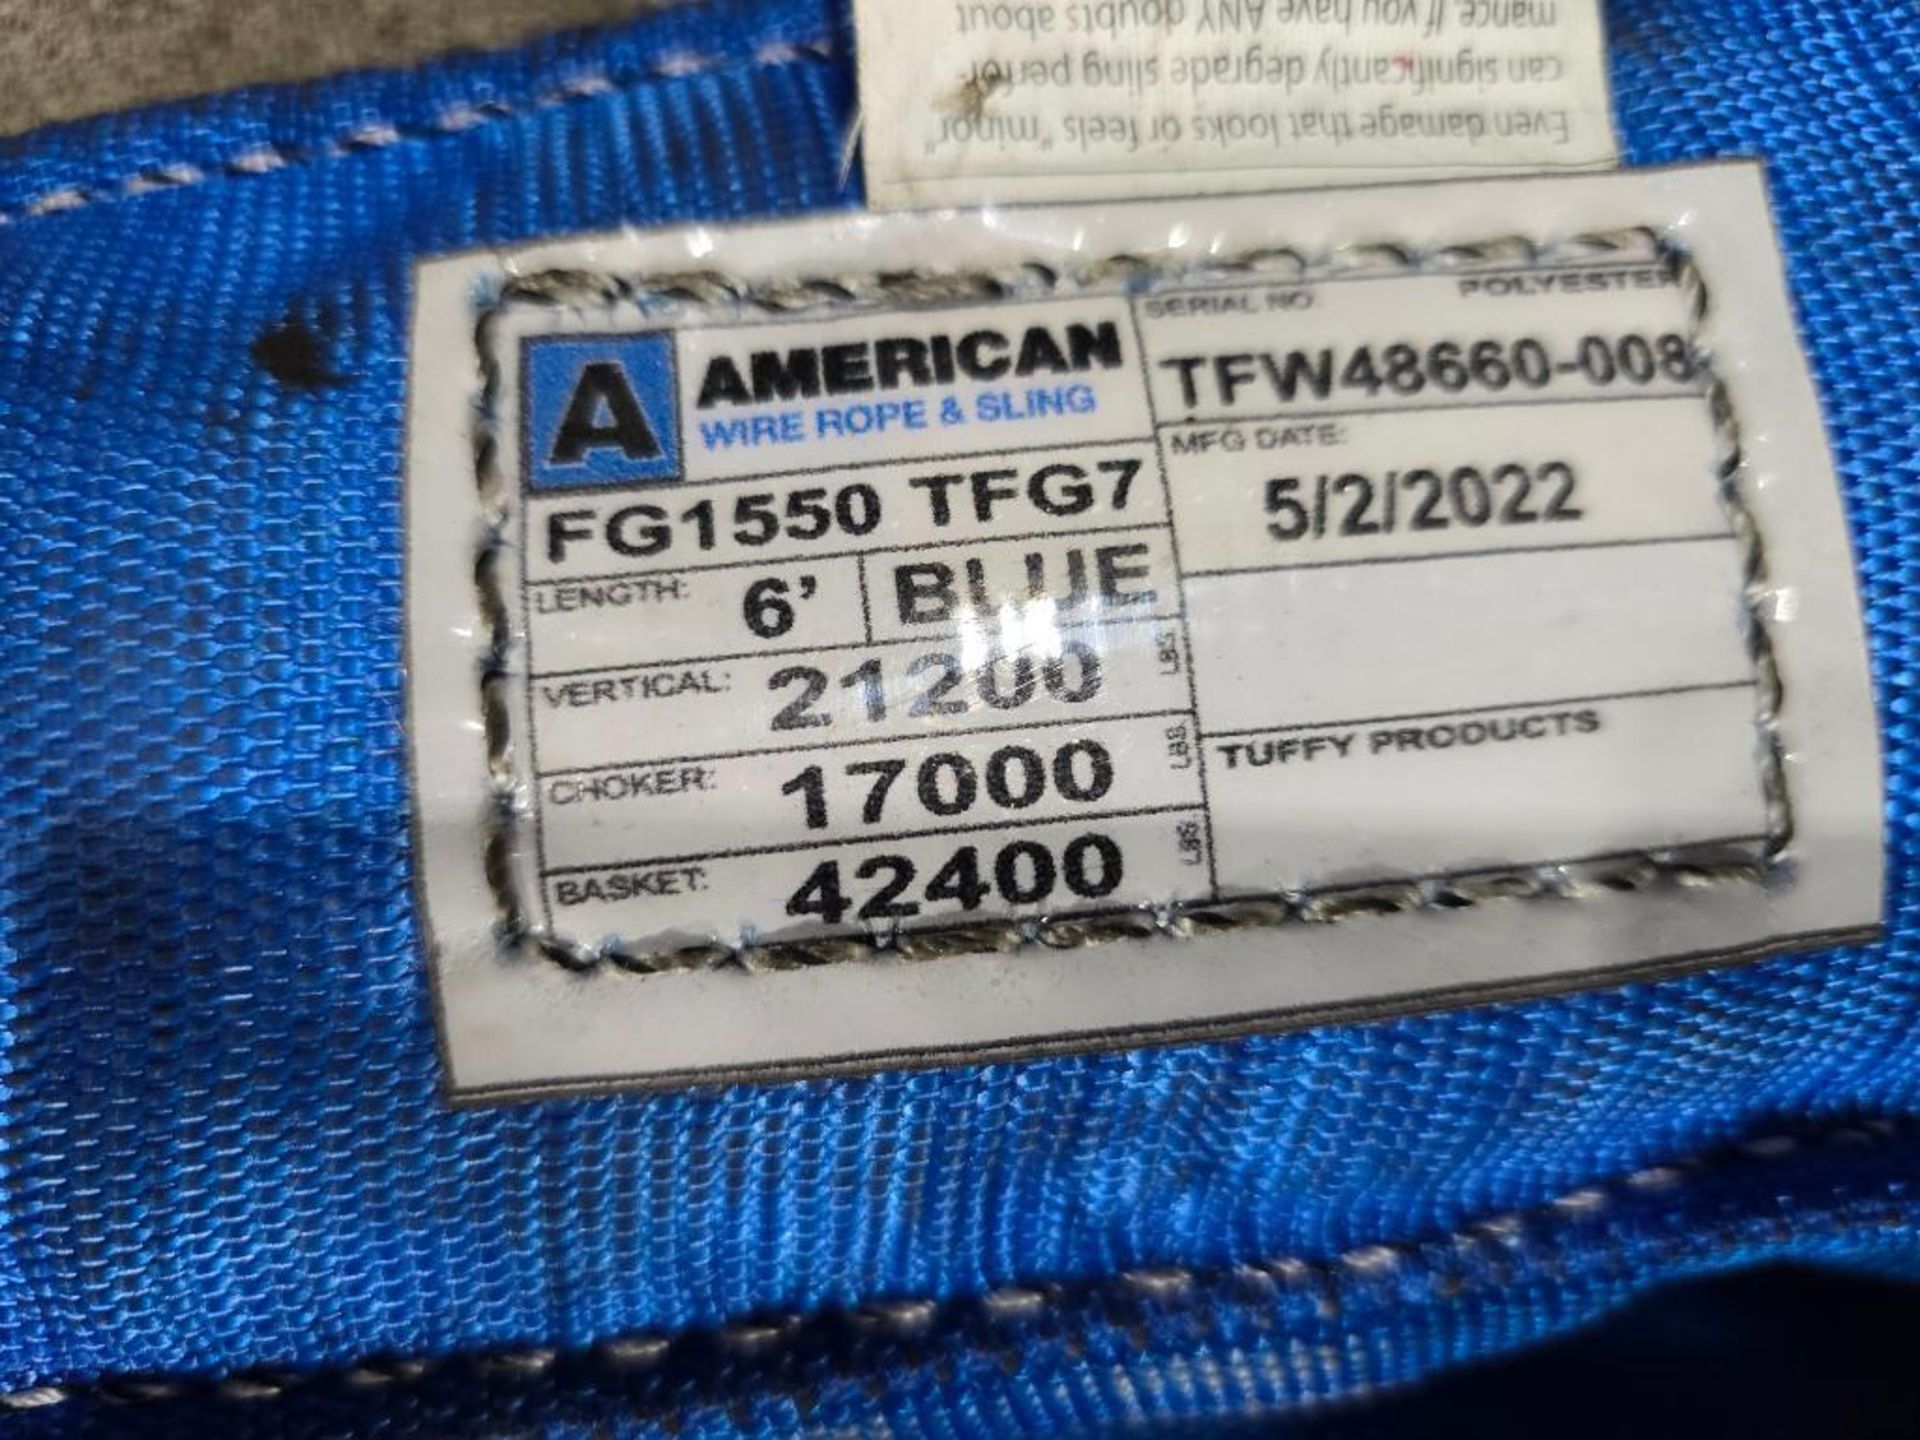 (4) 6' American Blue Polyester Round Slings, 21,200 LB. Vert./ 17,000 LB. Choker/ 42,400 LB. Basket - Image 4 of 4